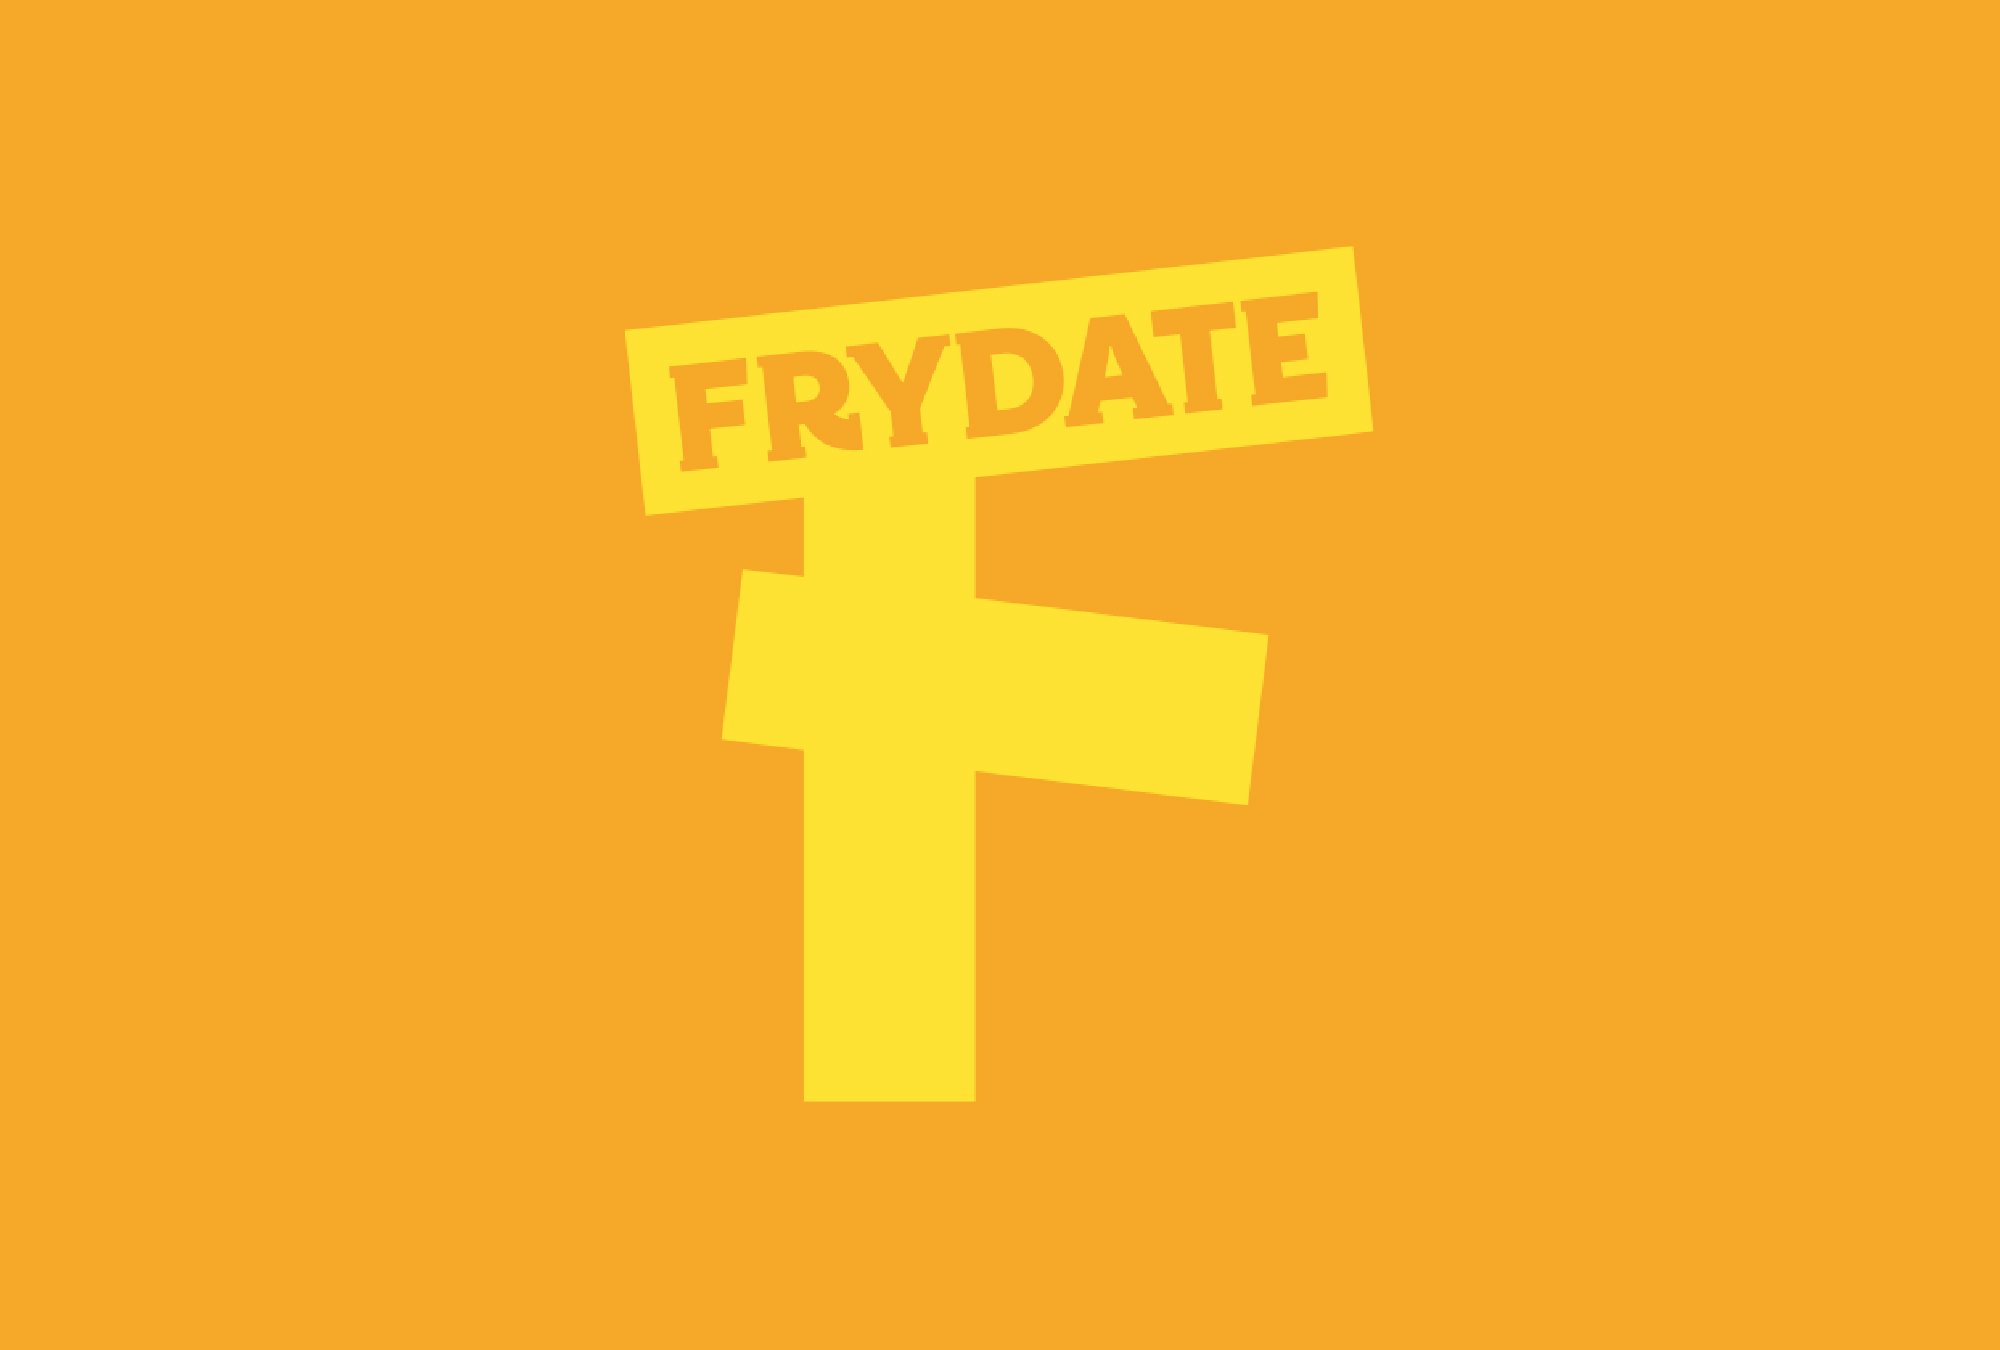 Logo for Belgian fast food brand Frydate, designed by Skinn.